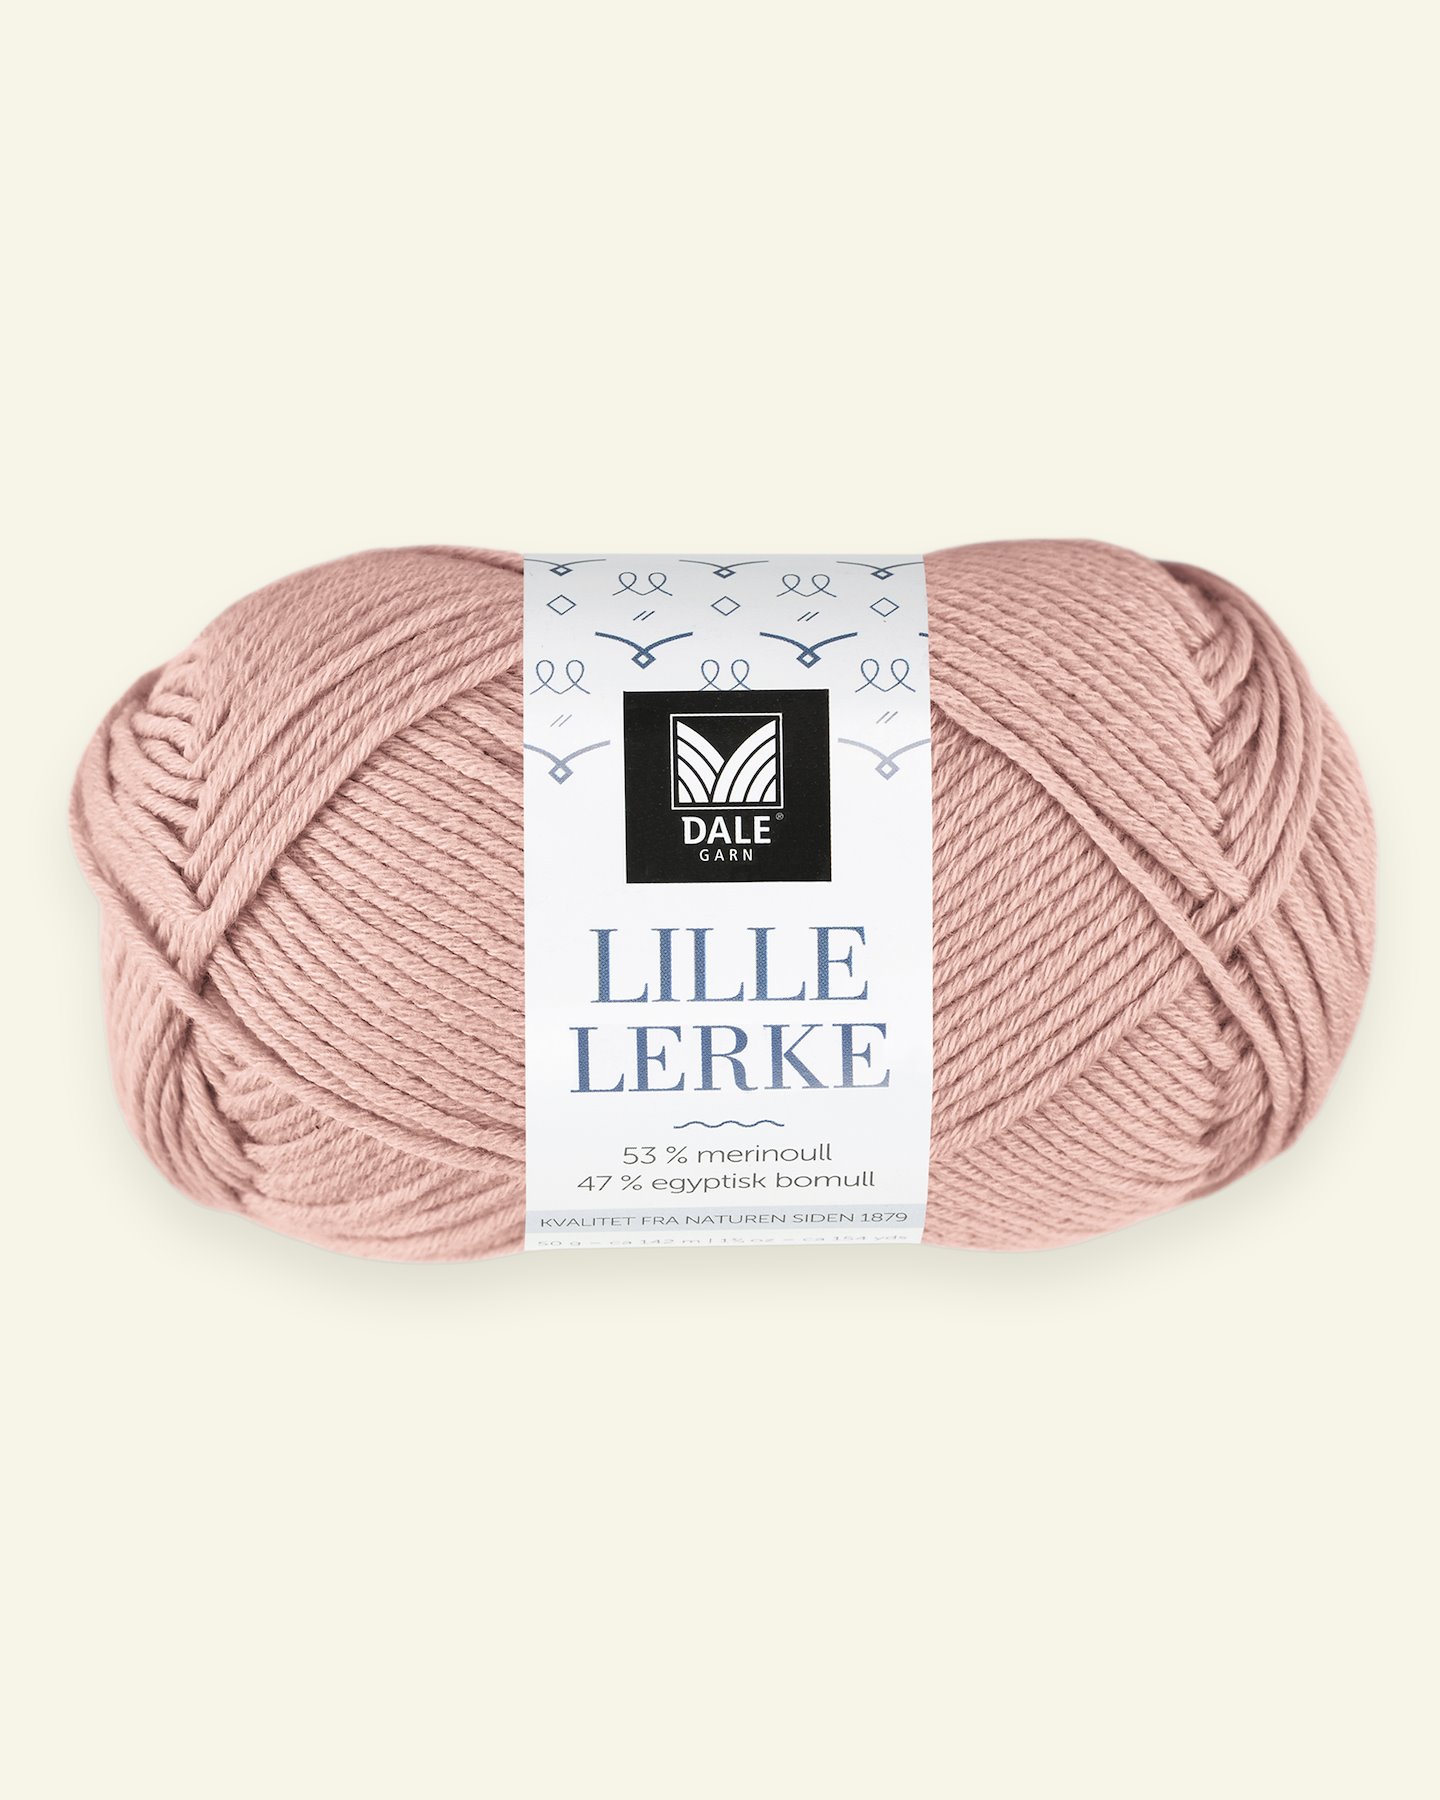 Dale Garn, merino/cotton yarn "Lille Lerke", dusty peach (8122) 90000412_pack